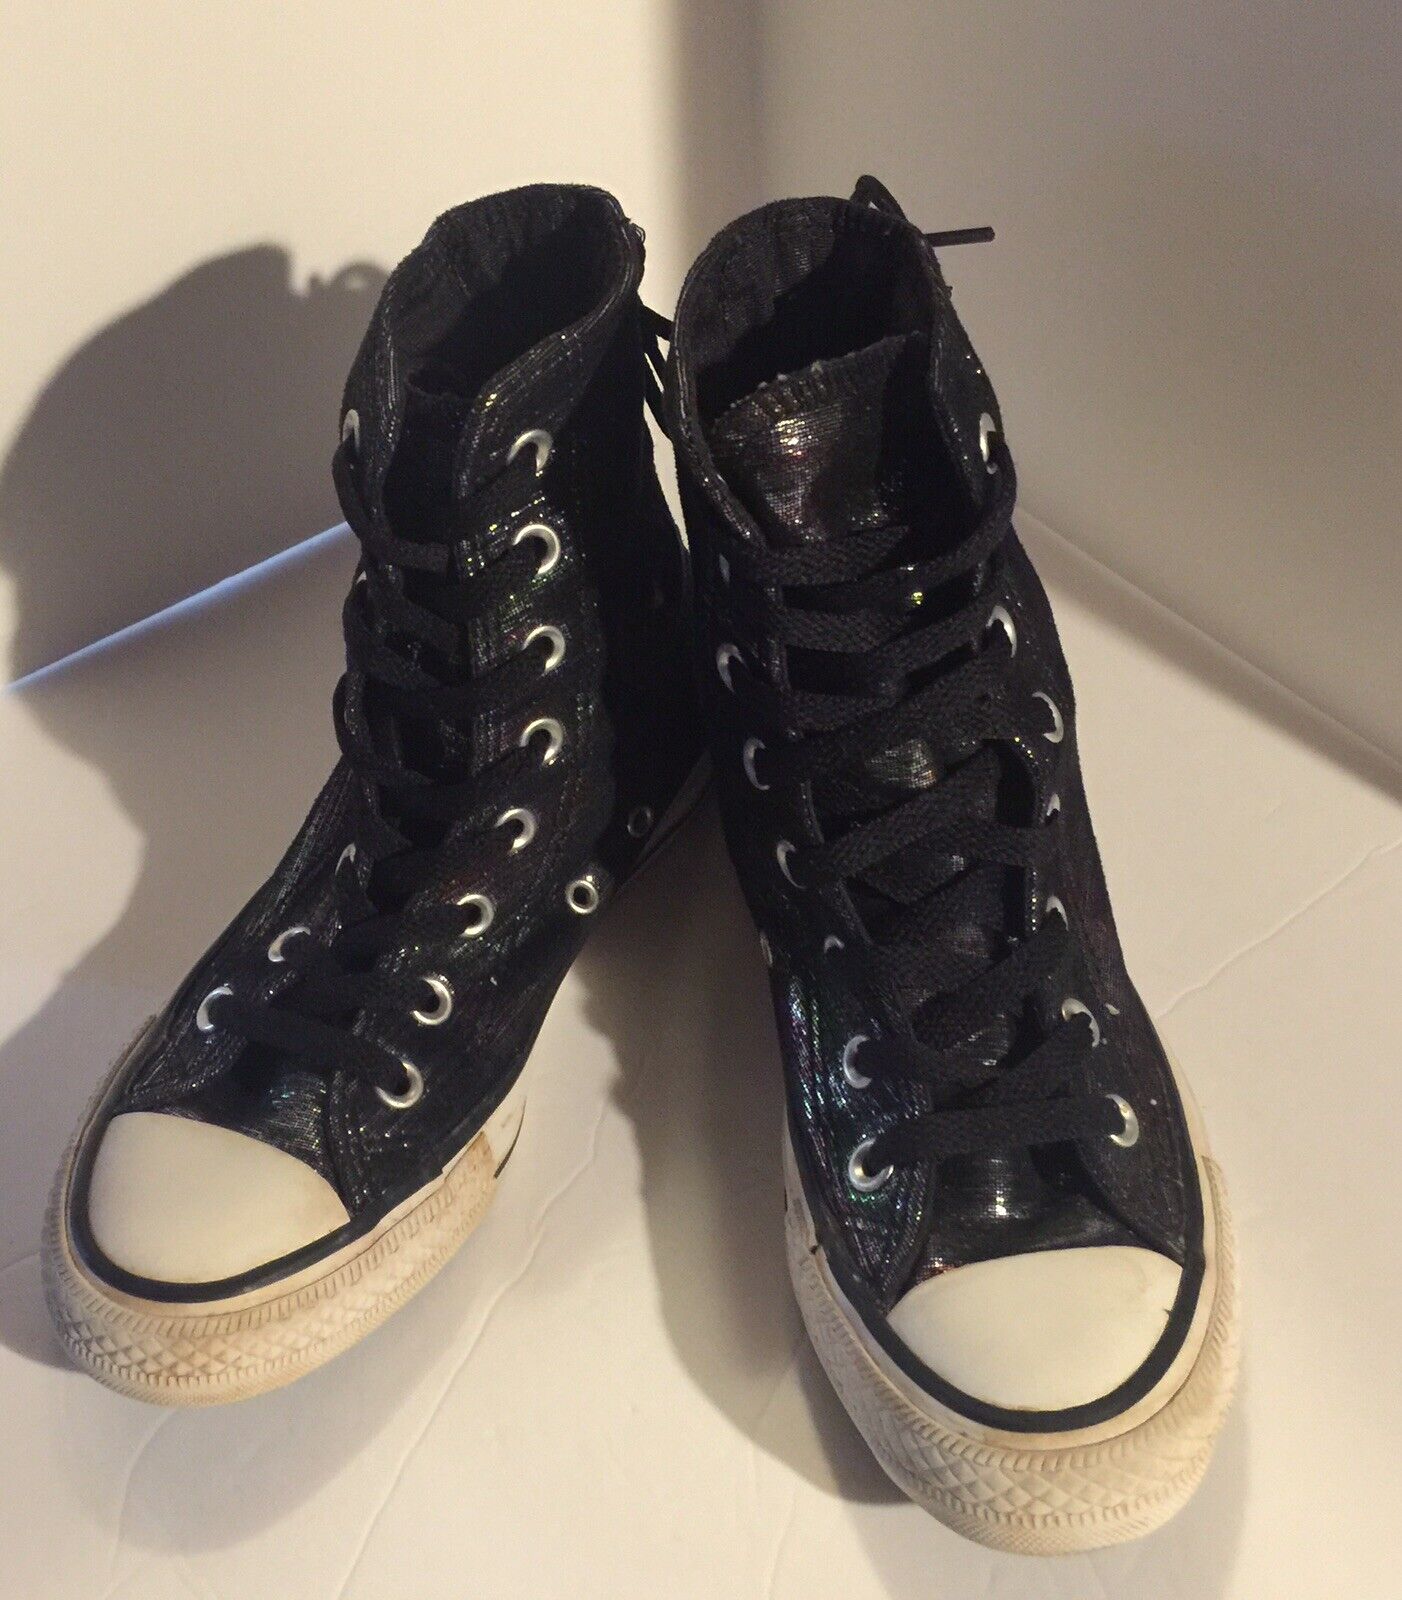 Converse Chuck Taylor All star Hightop Black Shiny Women's Size 5 Metallic  | eBay